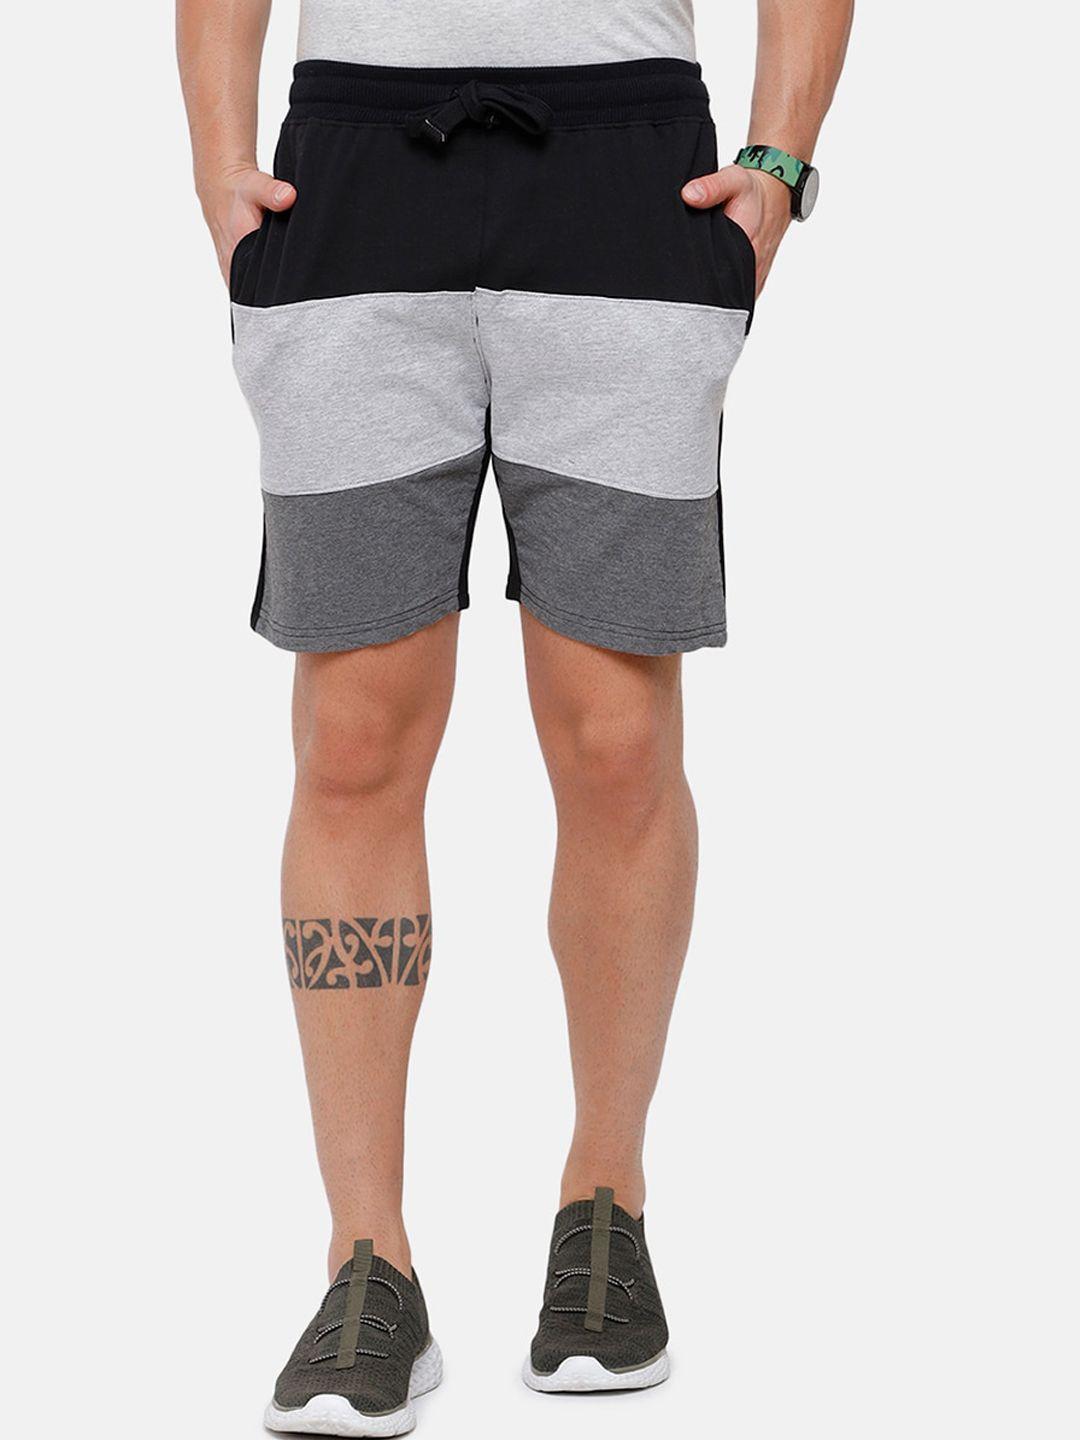 madsto men black & grey colourblocked slim fit shorts